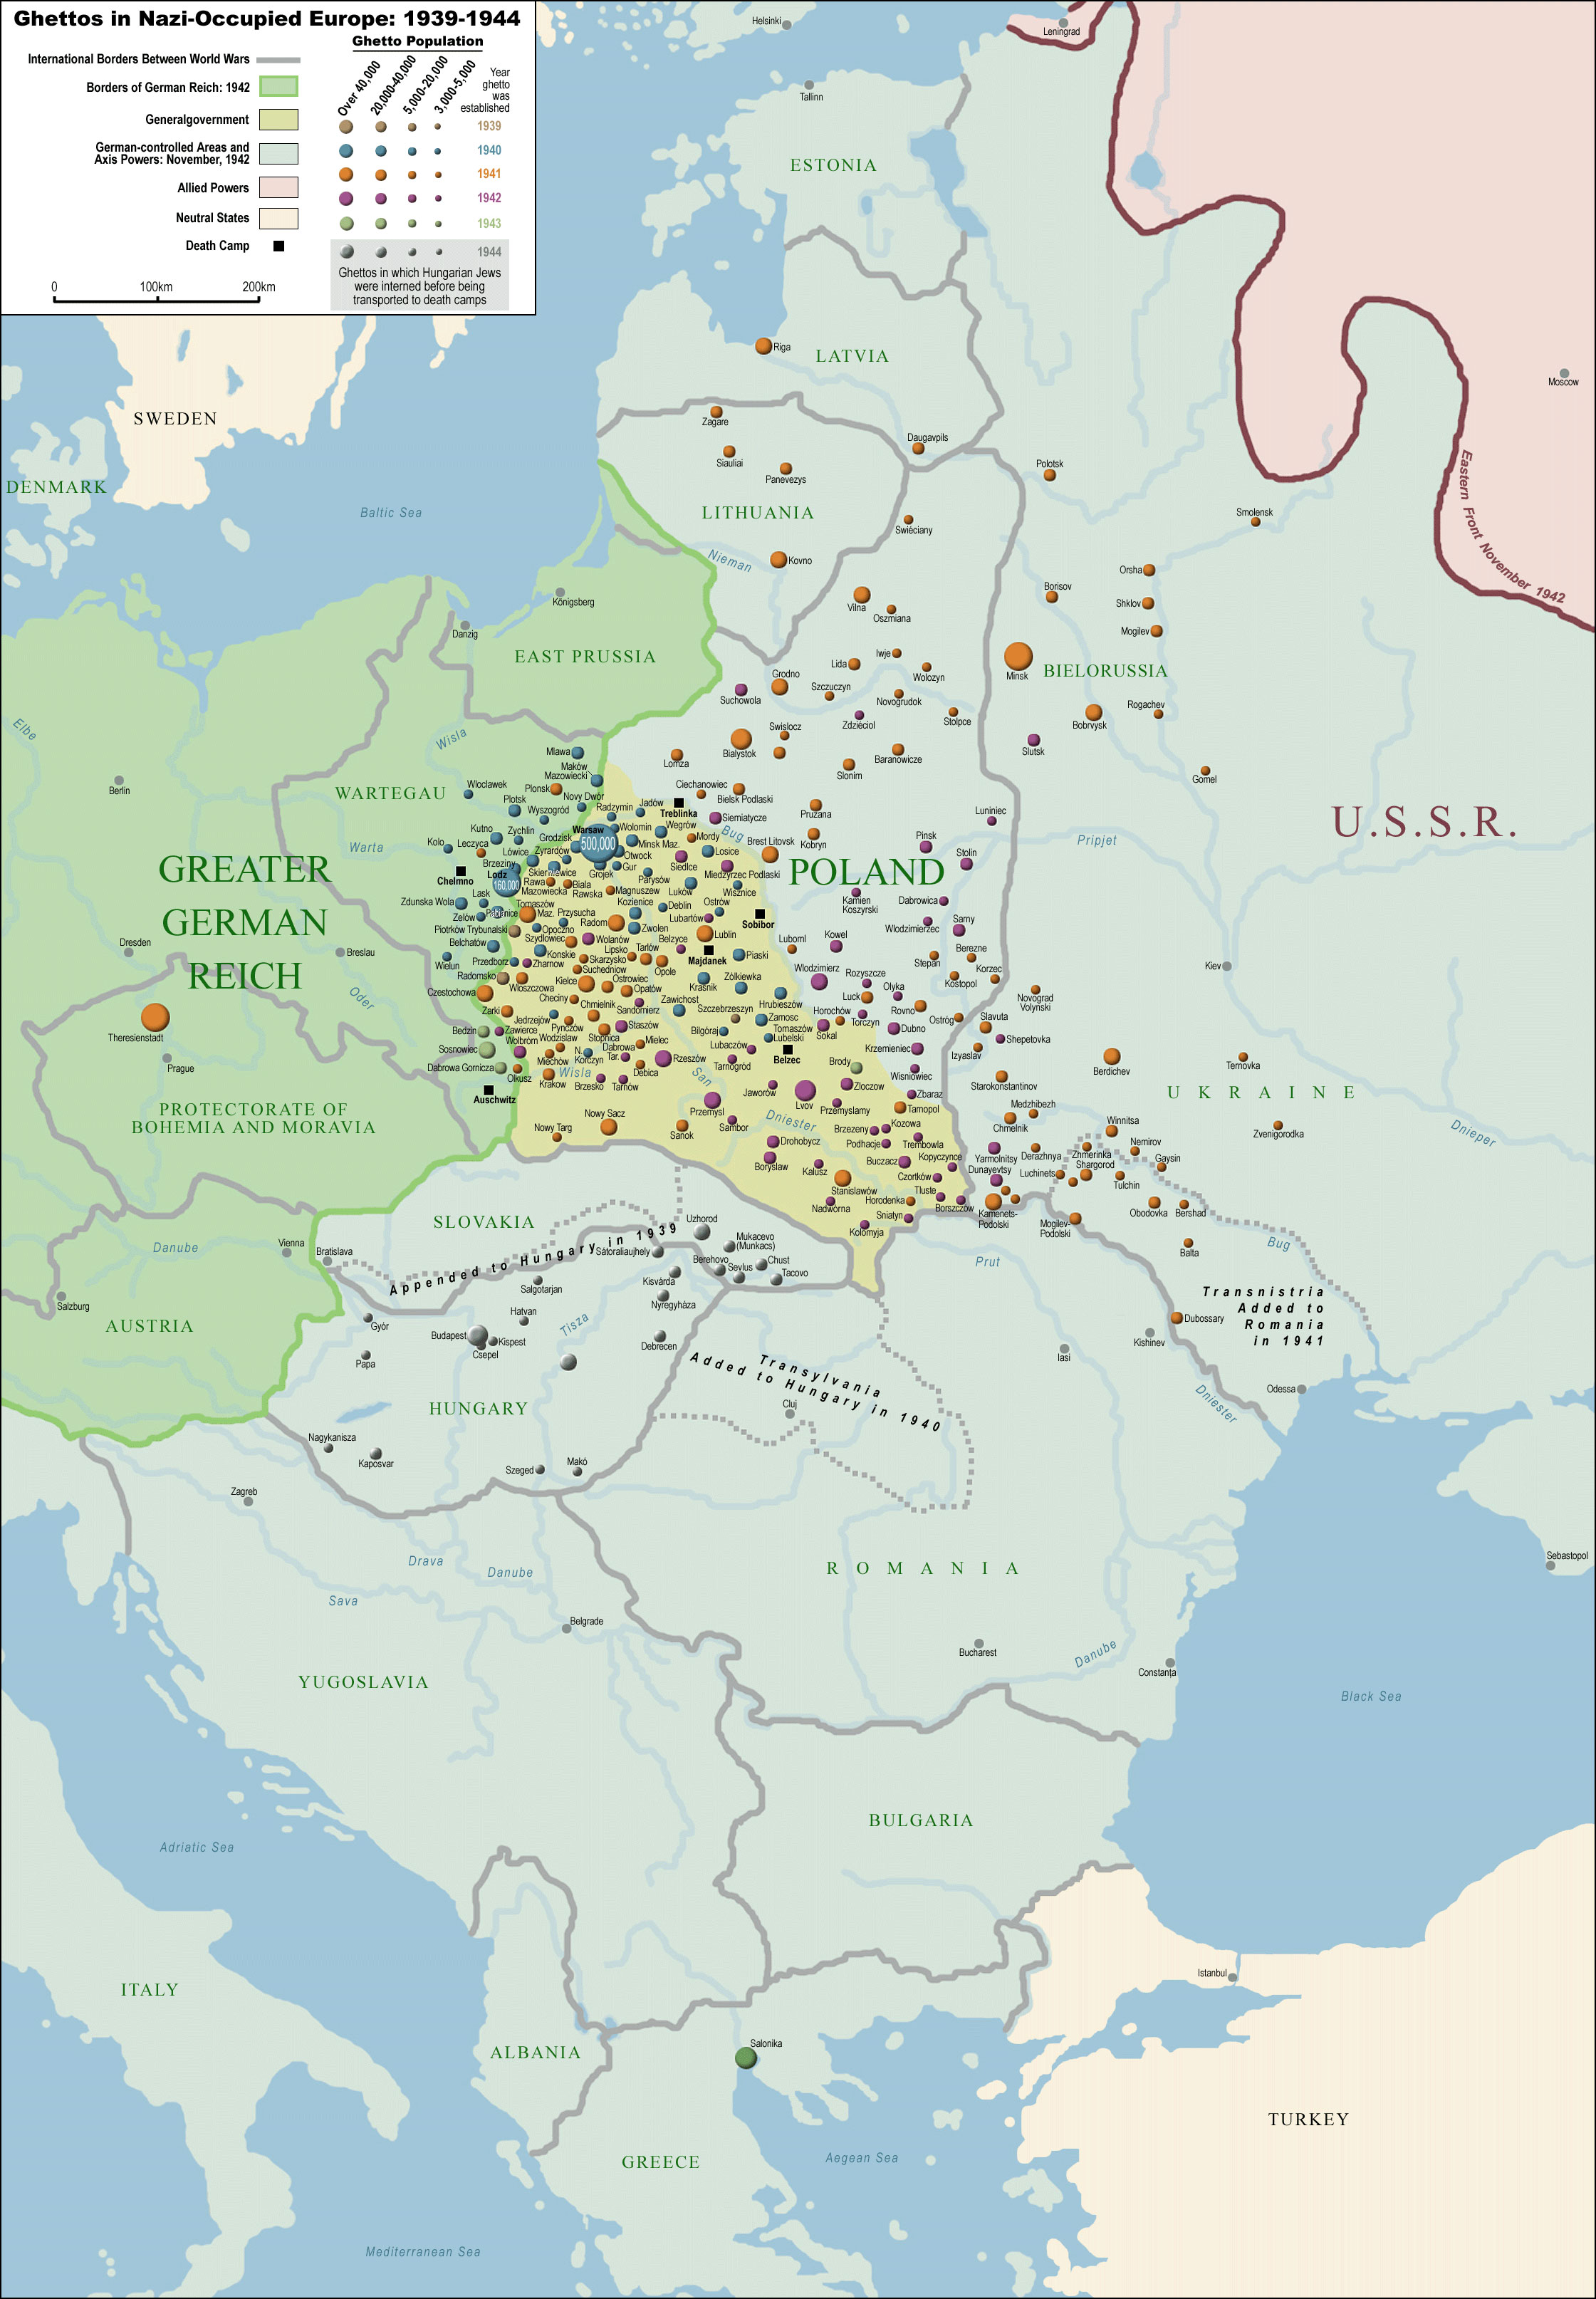 Ghettos in Nazi-Occupied Europe: 1939-1944.